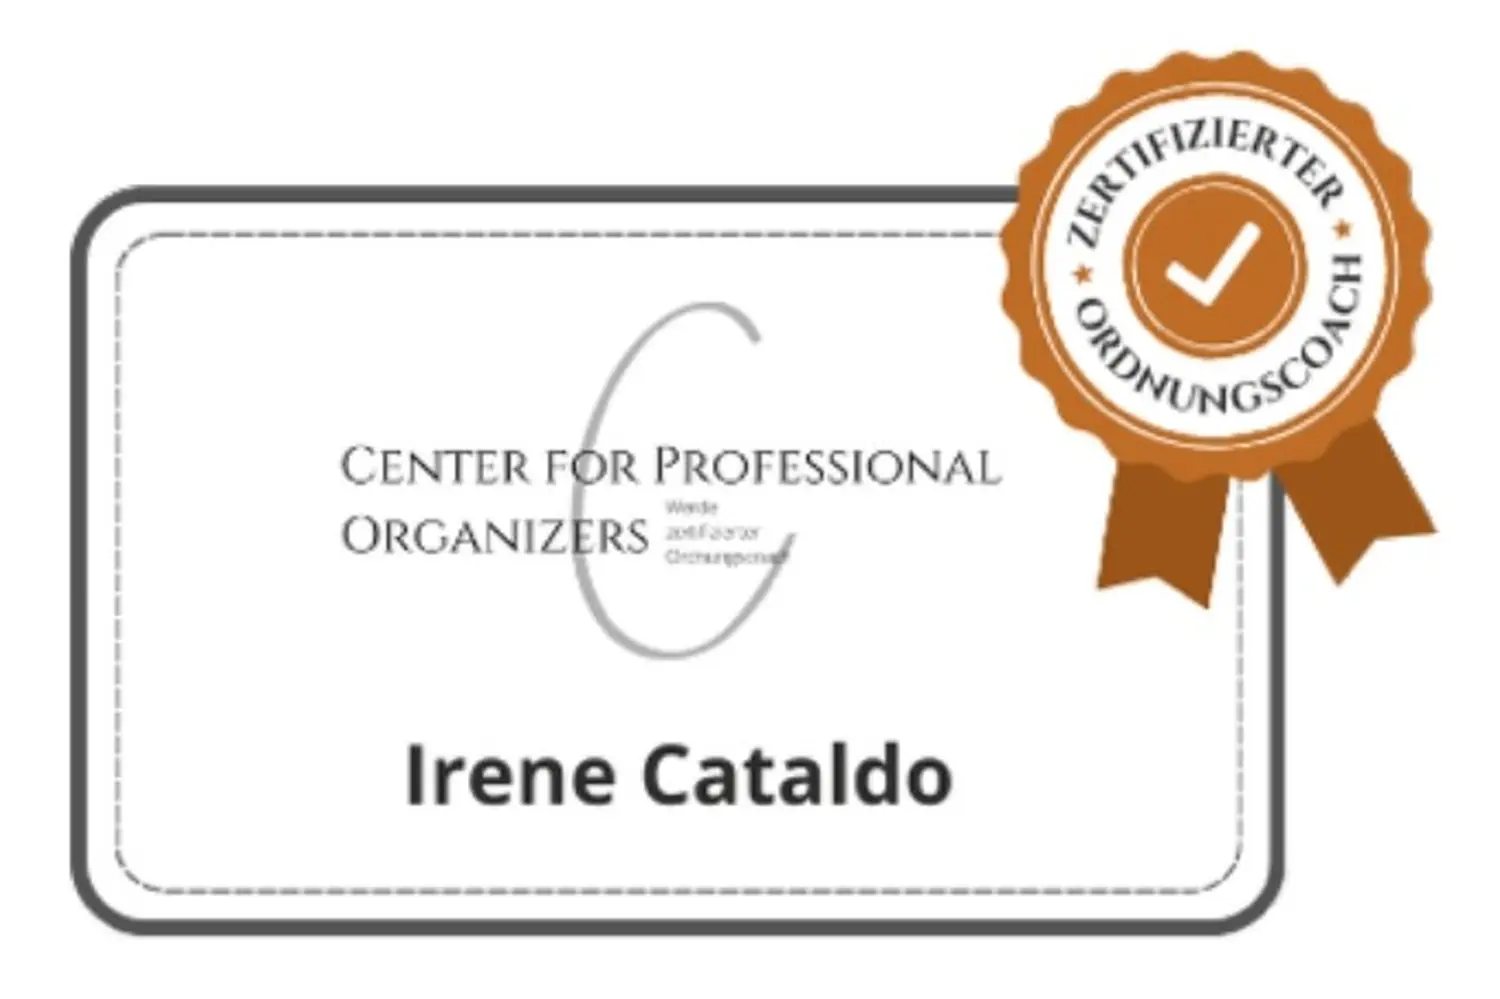 Irene Cataldo, Zertifikatssiegel